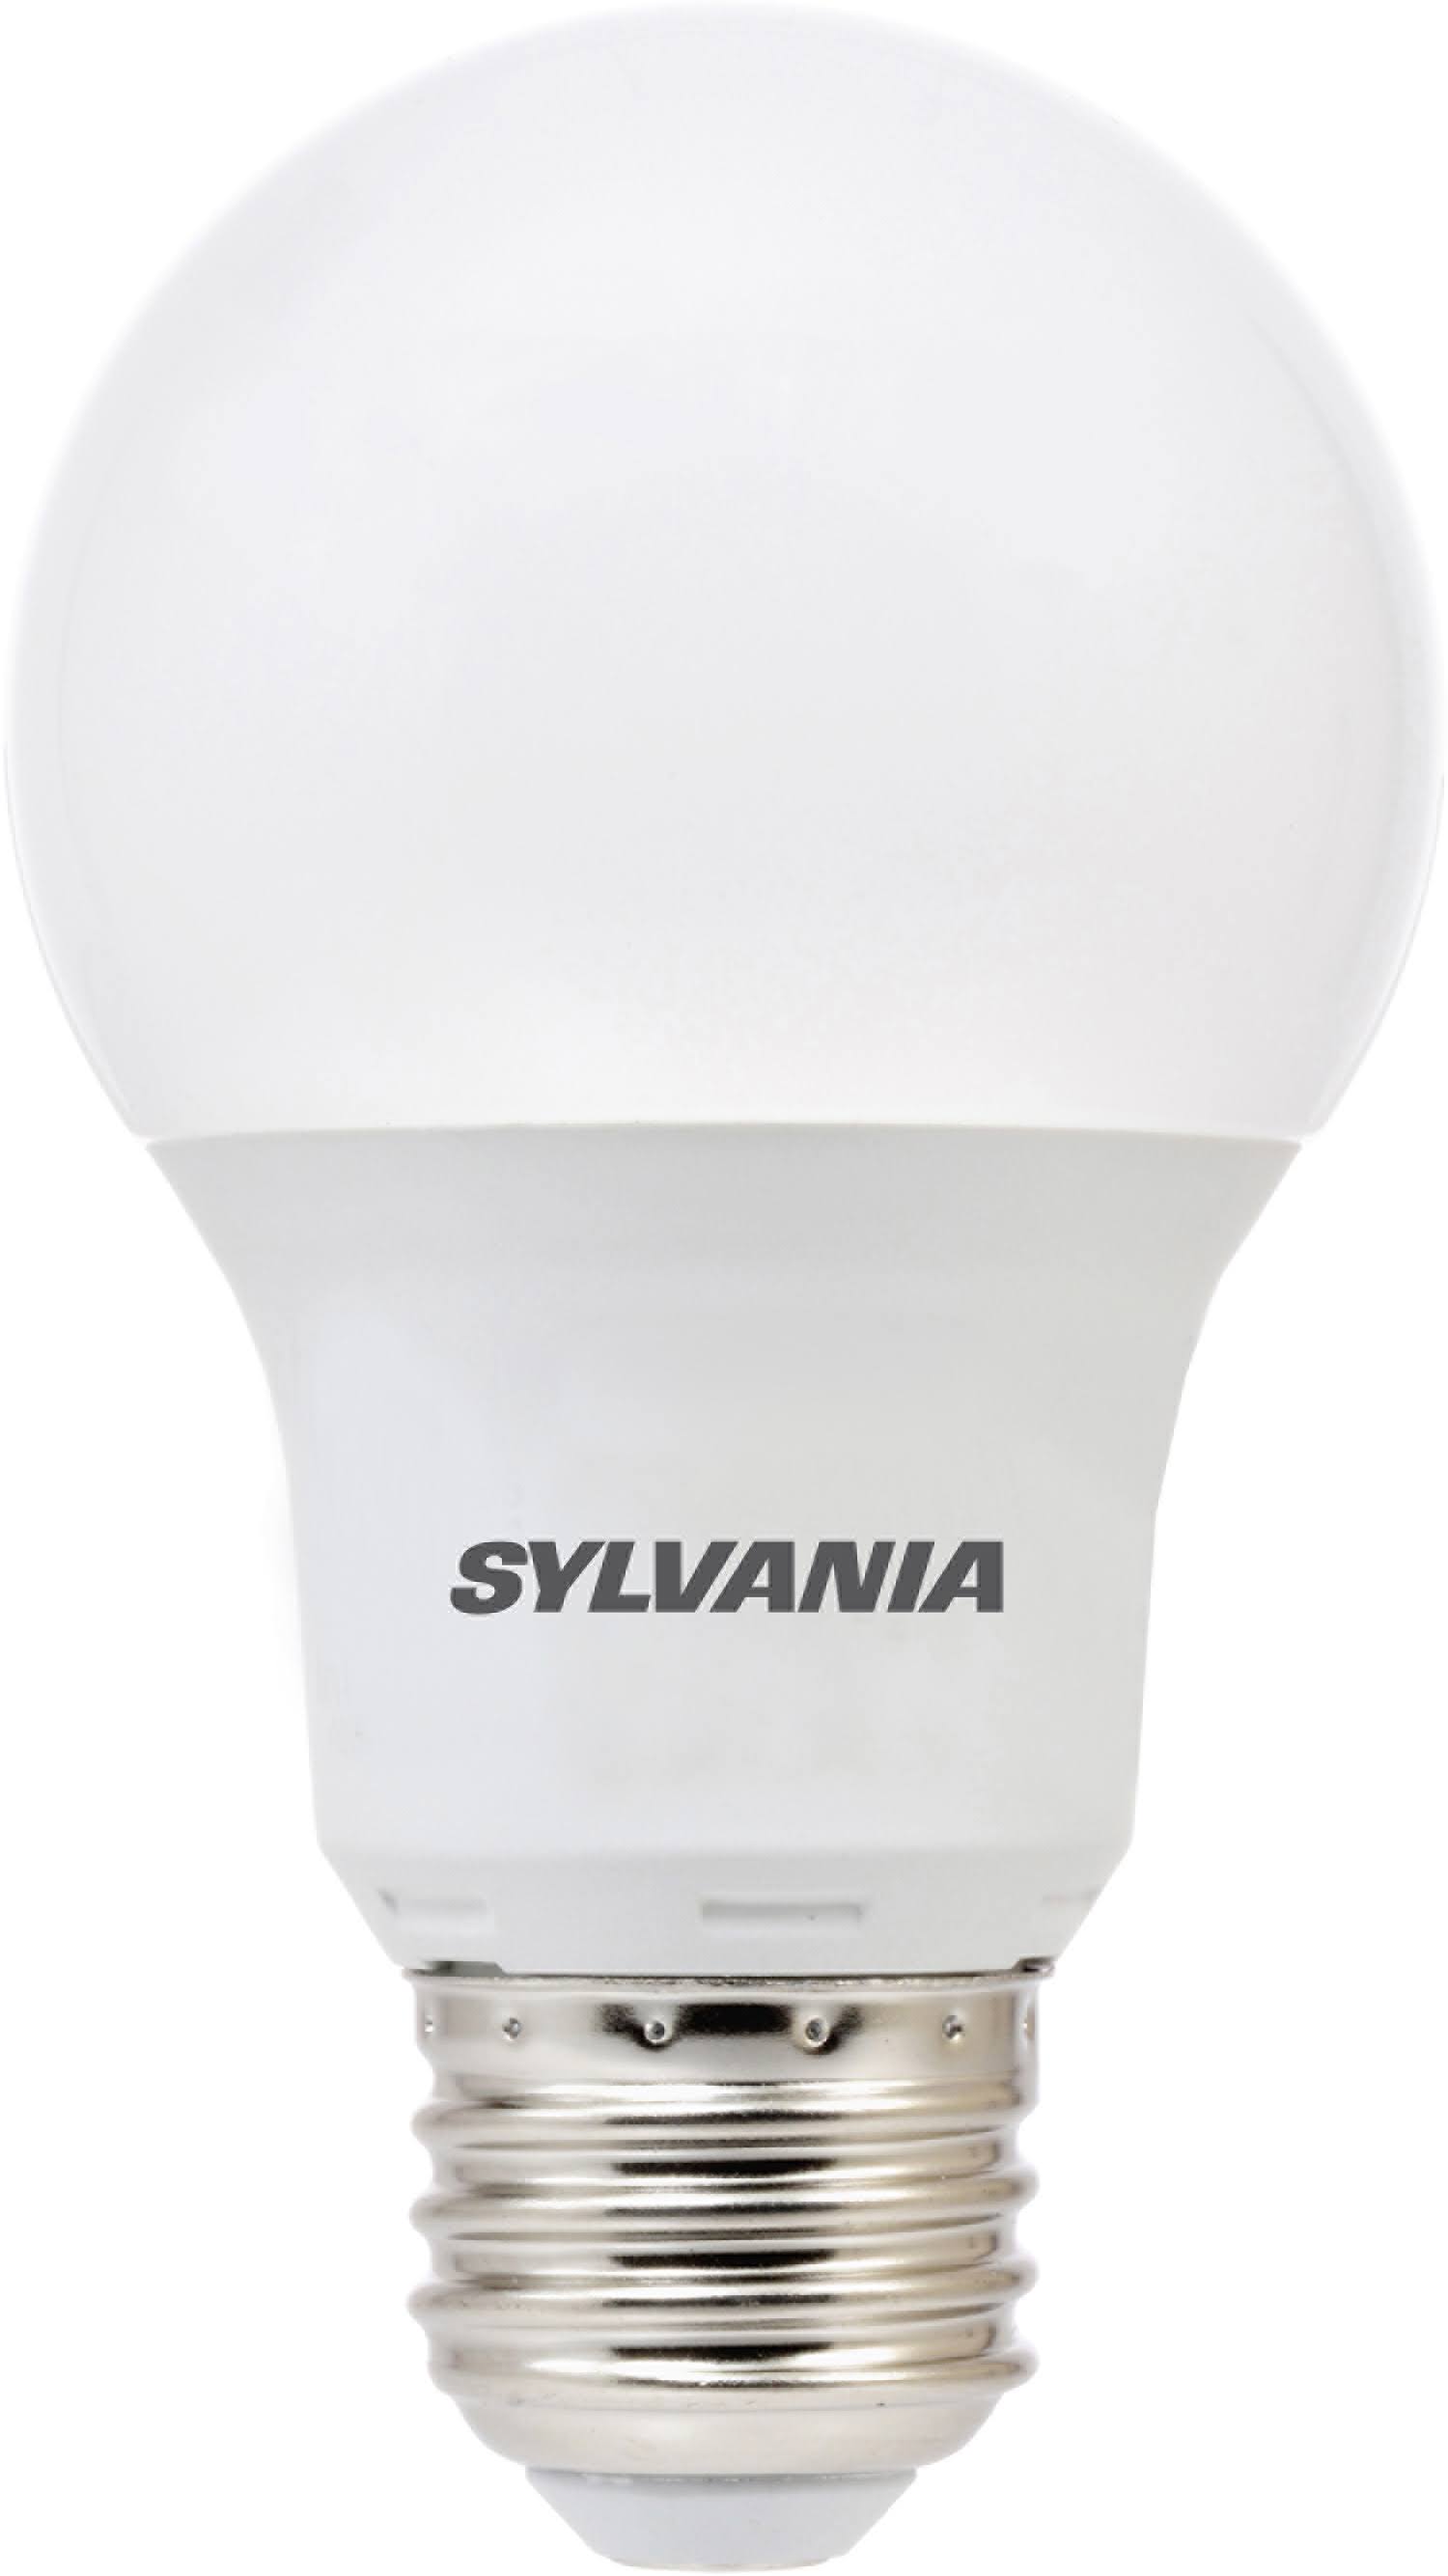 Osram Sylvania General Purpose LED Light Bulb - 8.5W, 120V, A19, Medium Base